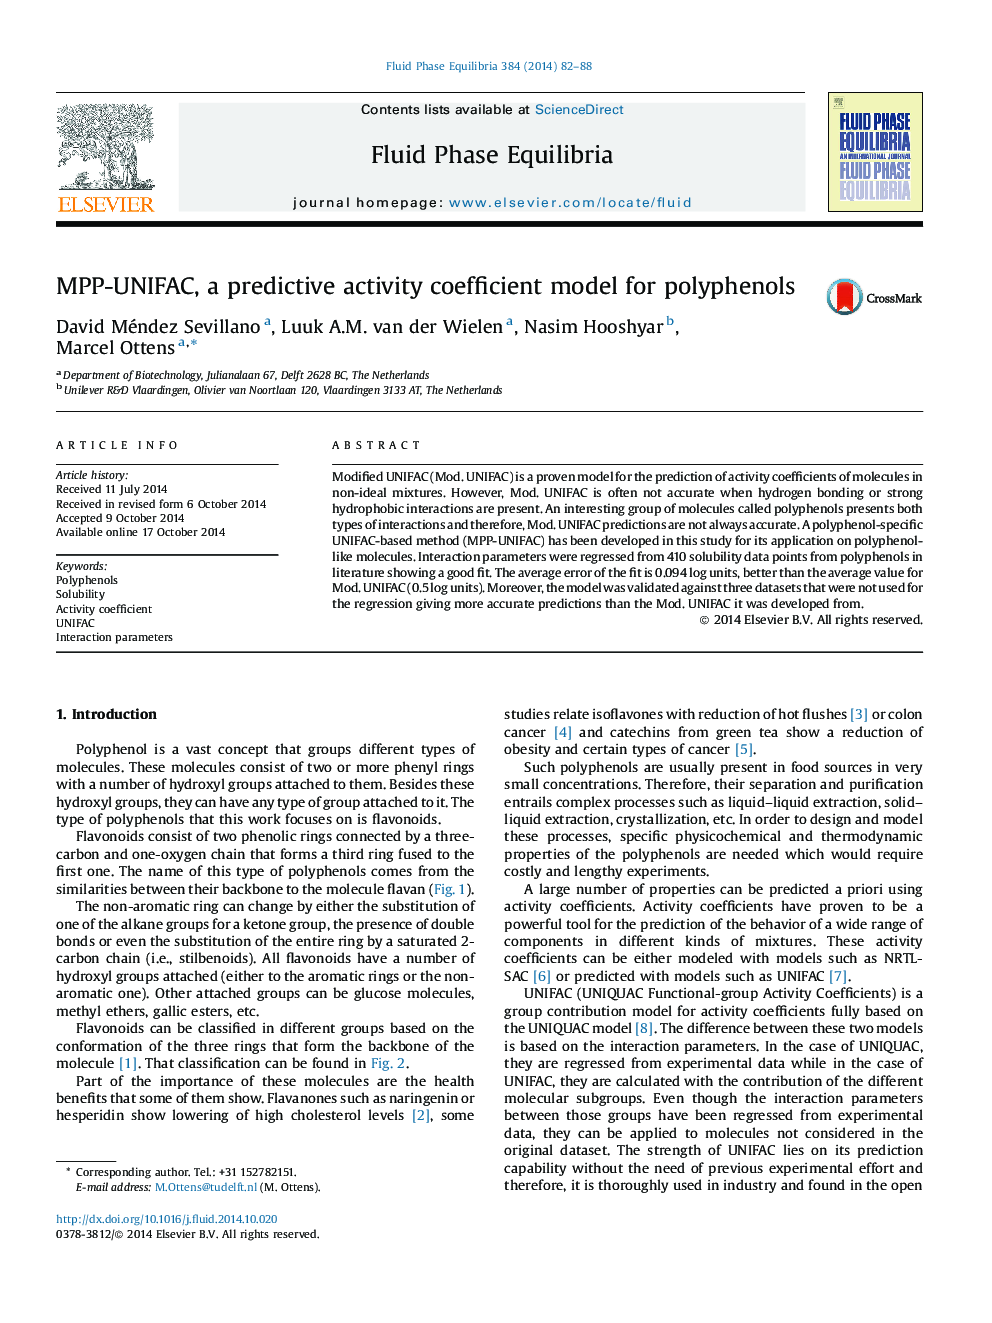 MPP-UNIFAC, a predictive activity coefficient model for polyphenols